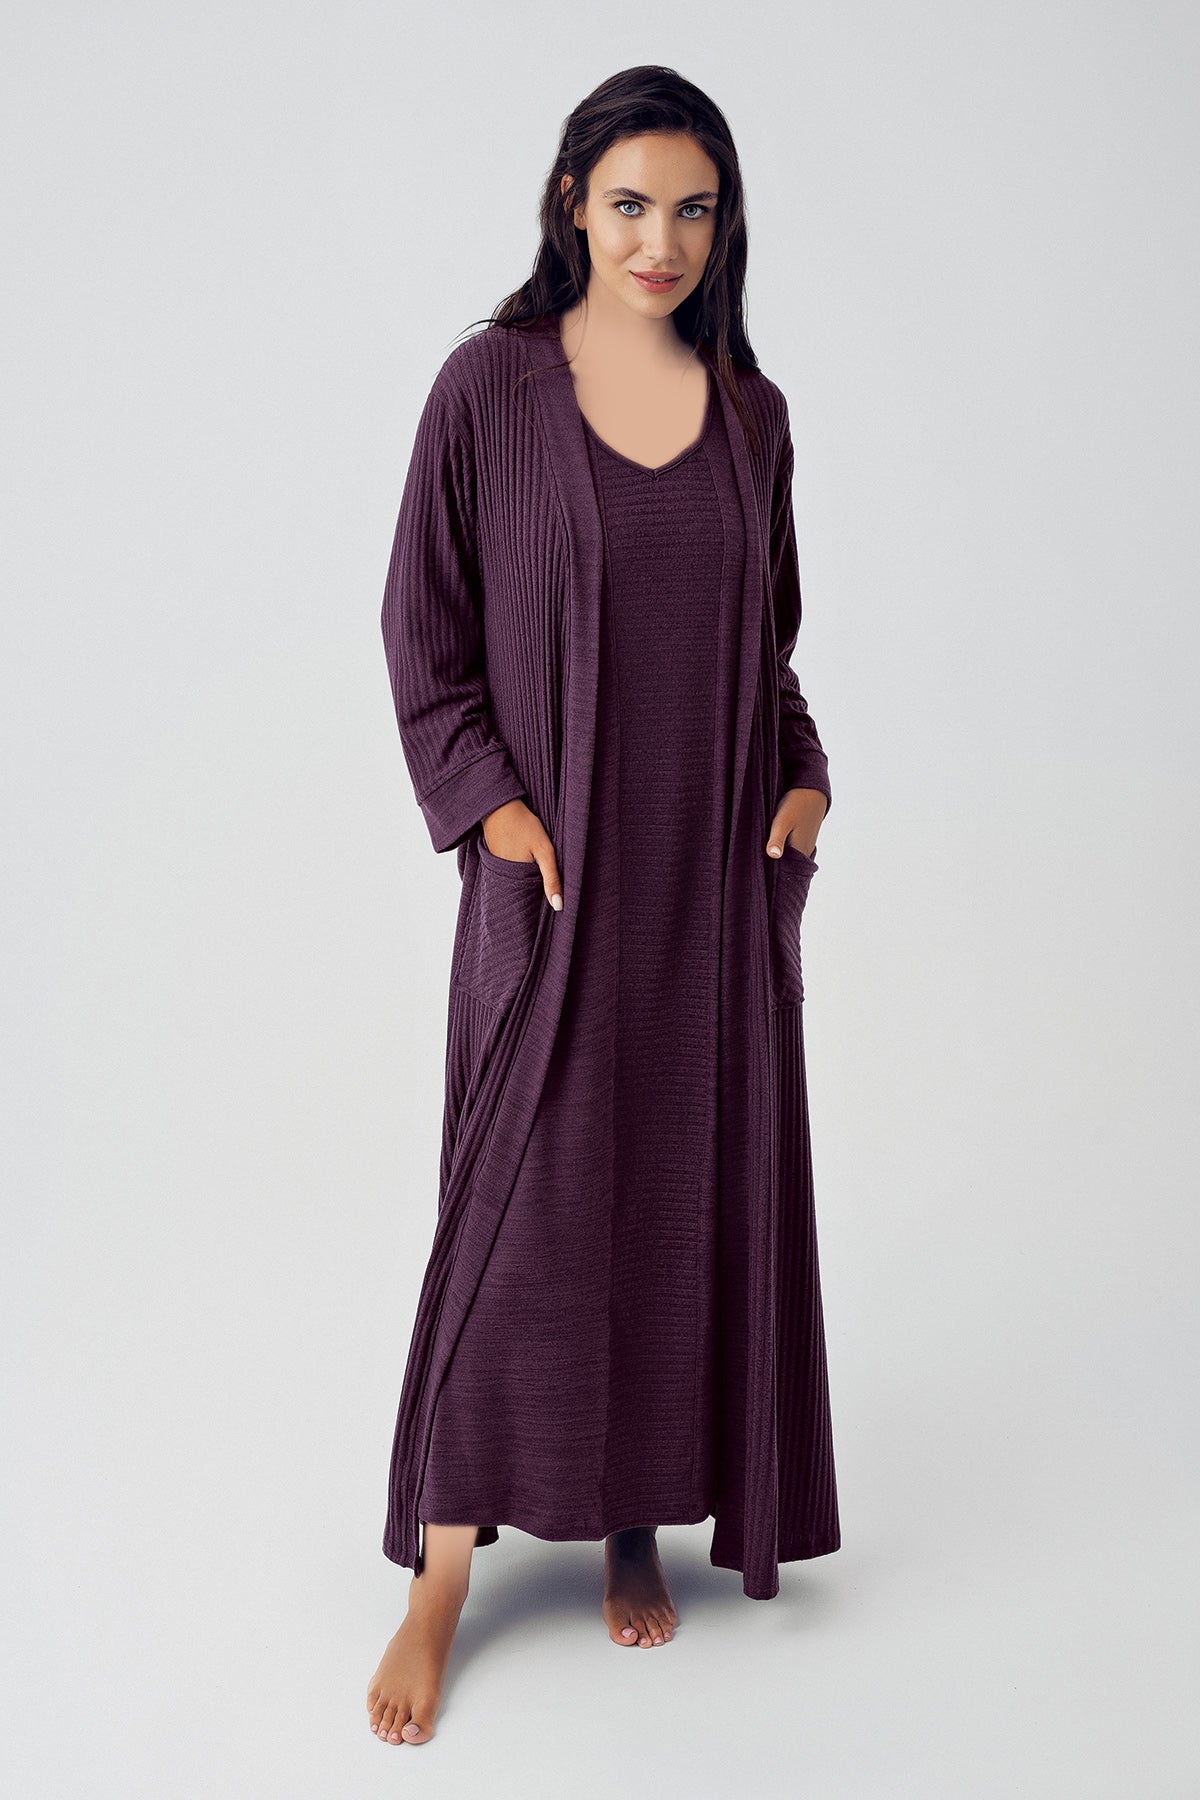 S&L Jacquard 2 Piece Robe Night Gown Set